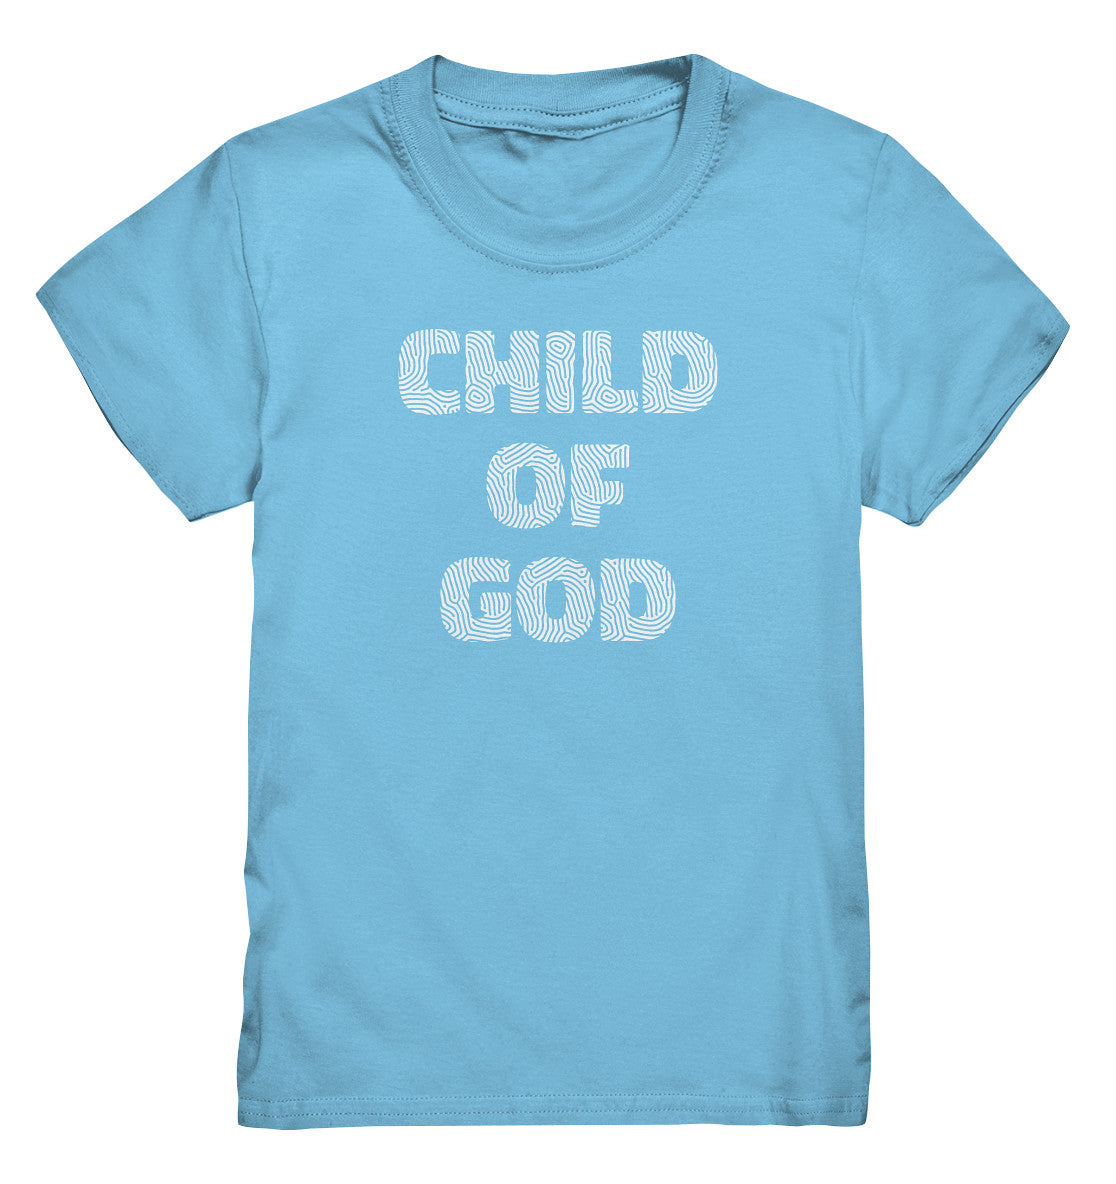 Joh 1,12 - Child of God - Fingerprint Weiß - Kids Premium Shirt